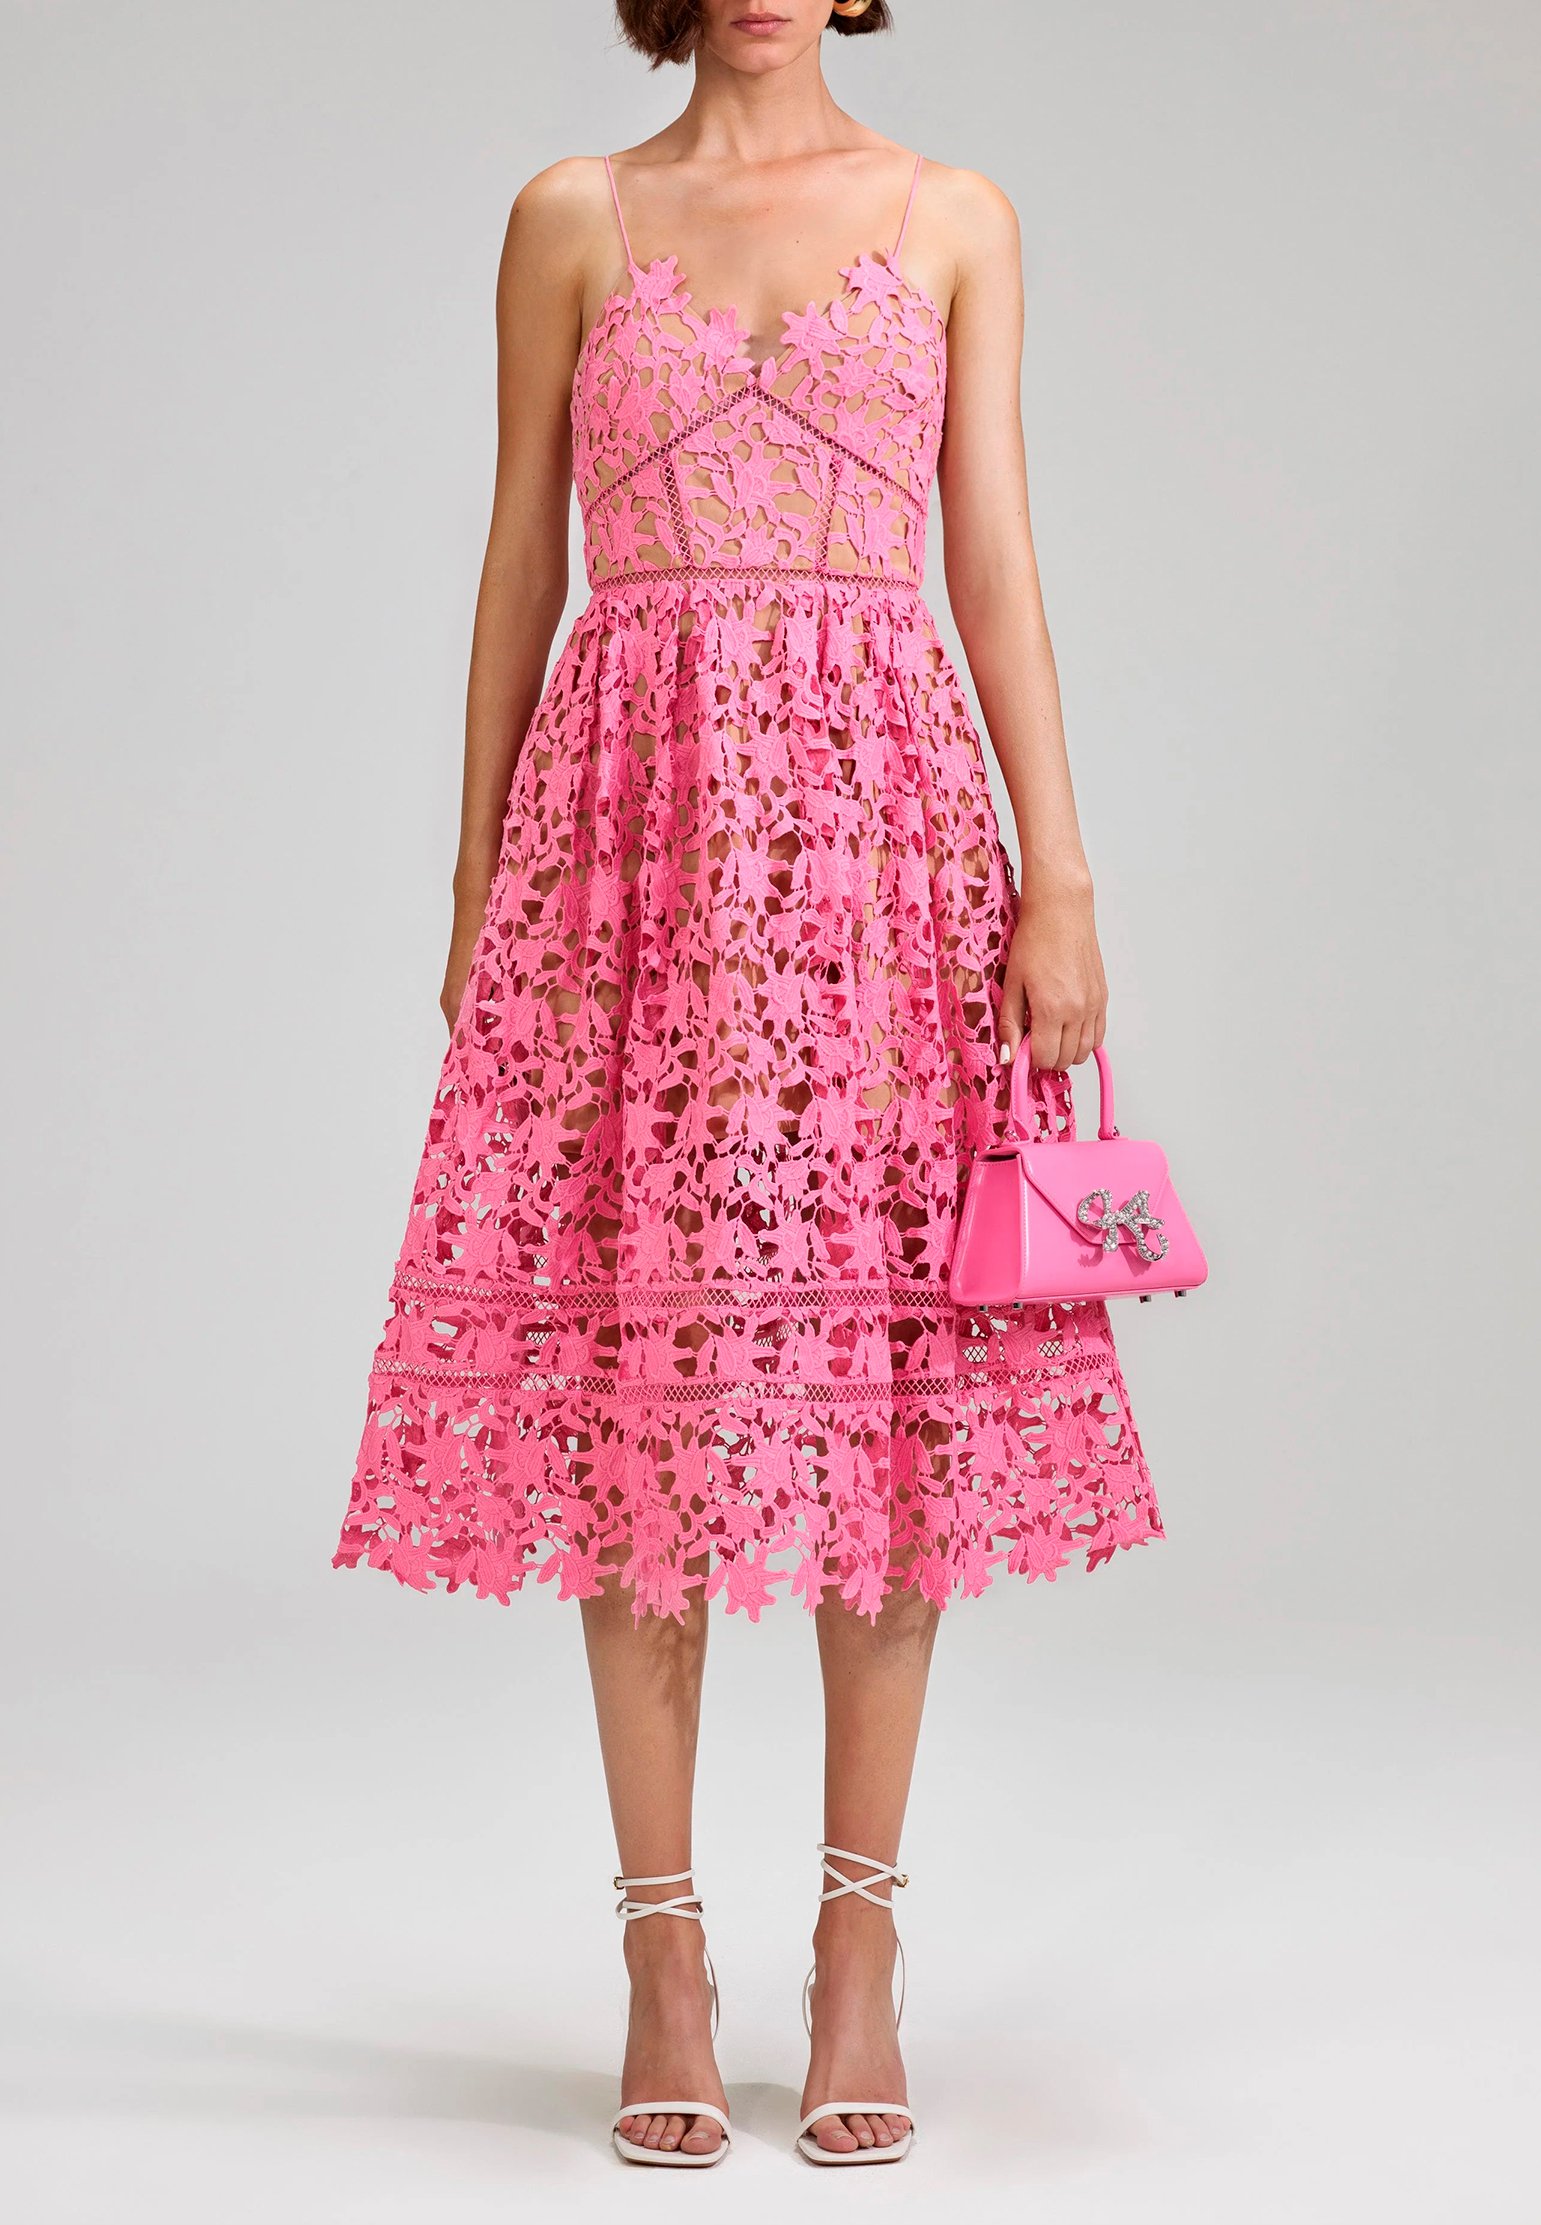 Dress SELF-PORTRAIT Color: pink (Code: 1796) in online store Allure